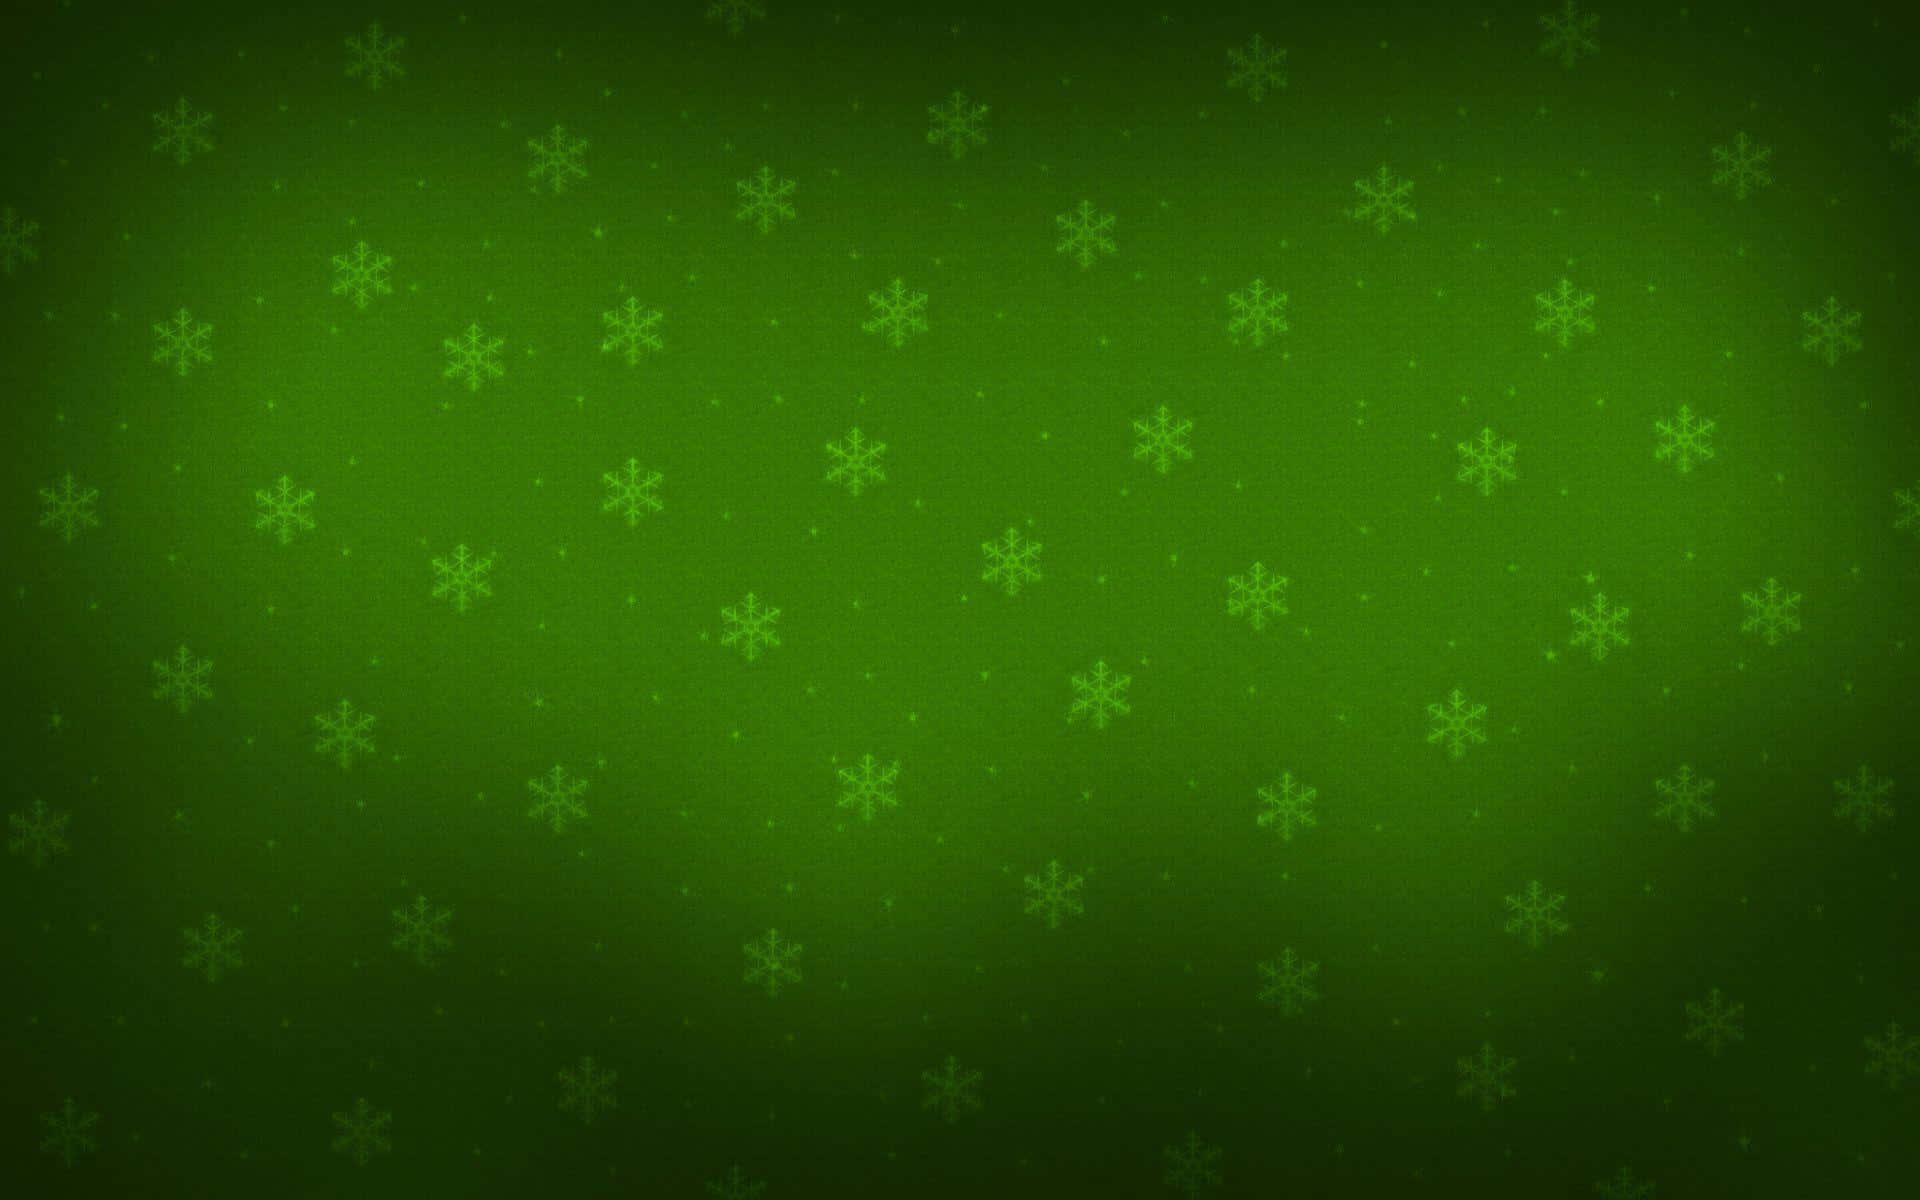 Caption: Festive Dark Green Christmas Decorations Wallpaper